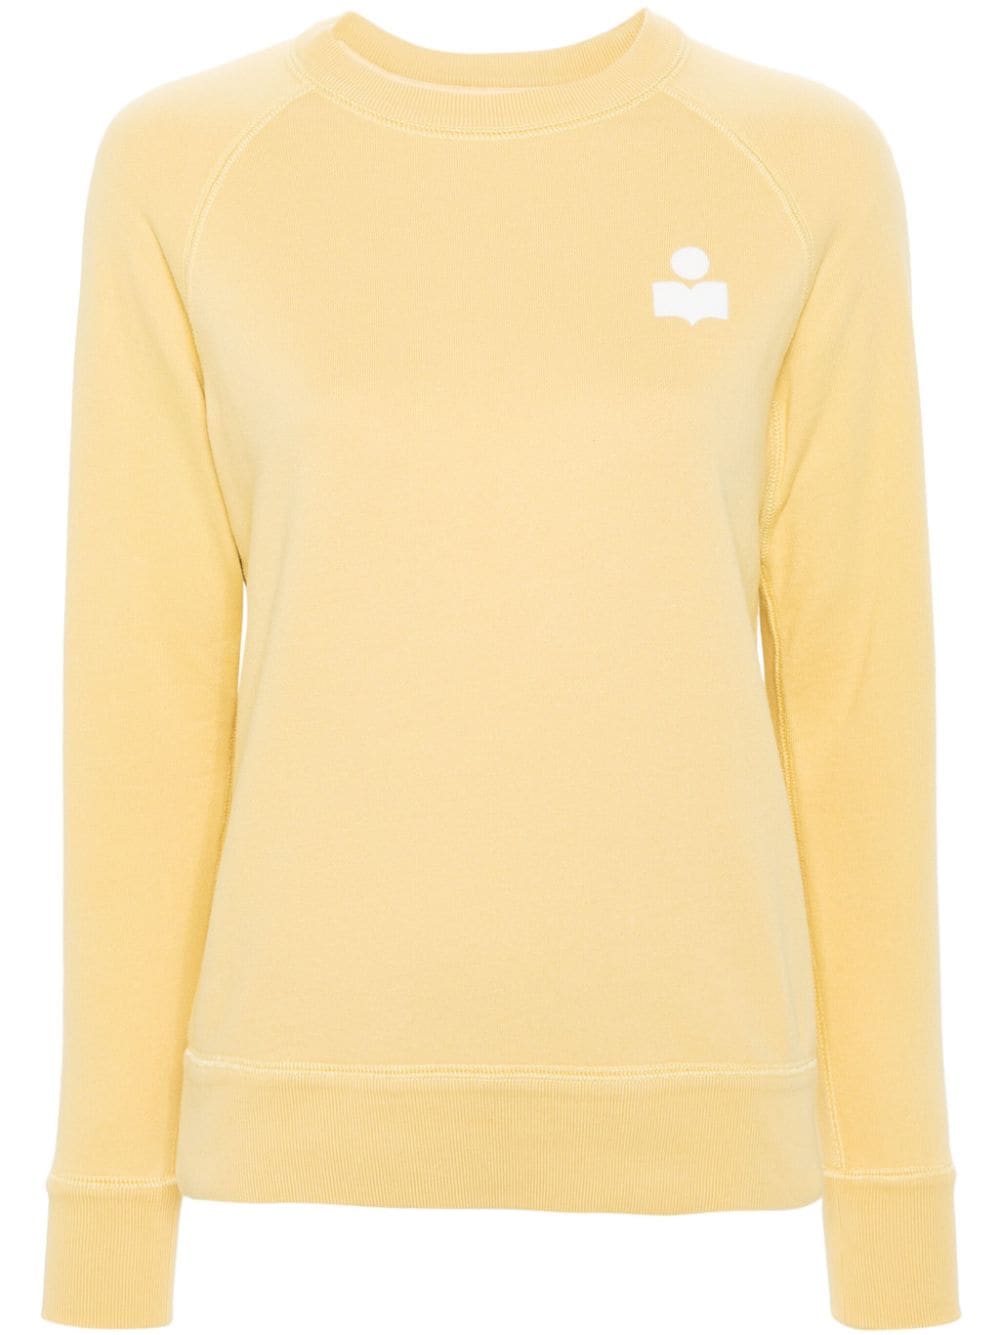 MARANT ÉTOILE flocked logo seam-detail sweatshirt - Yellow von MARANT ÉTOILE